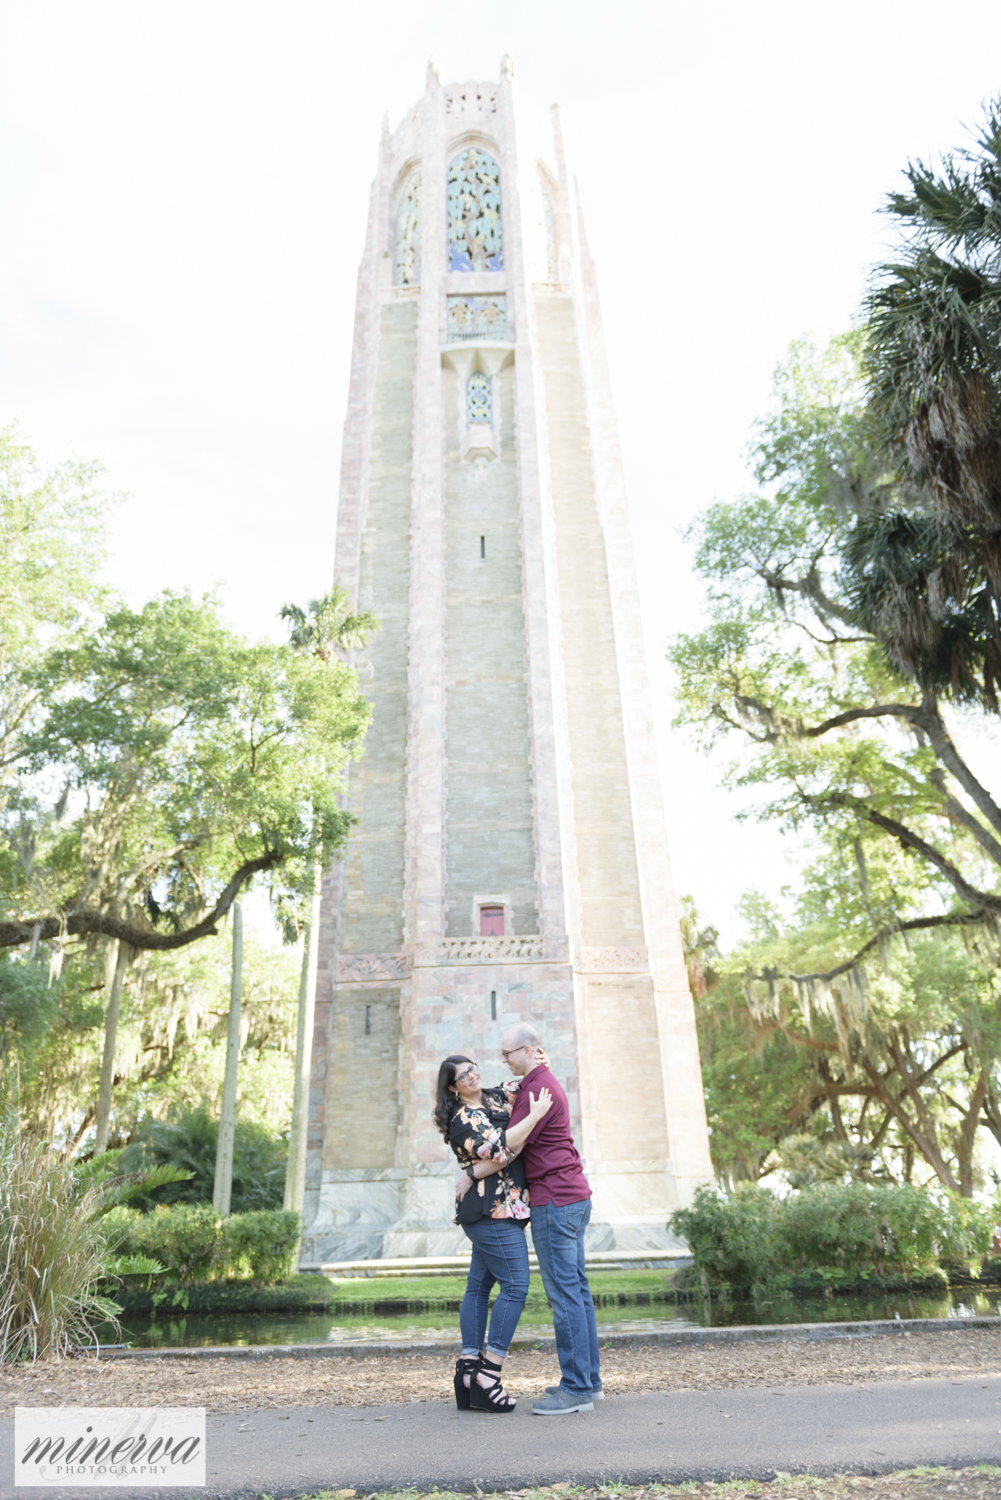 007_bok-tower-gardens_wedding-engagement-portrait-orlando-photography_central-florida-photographer